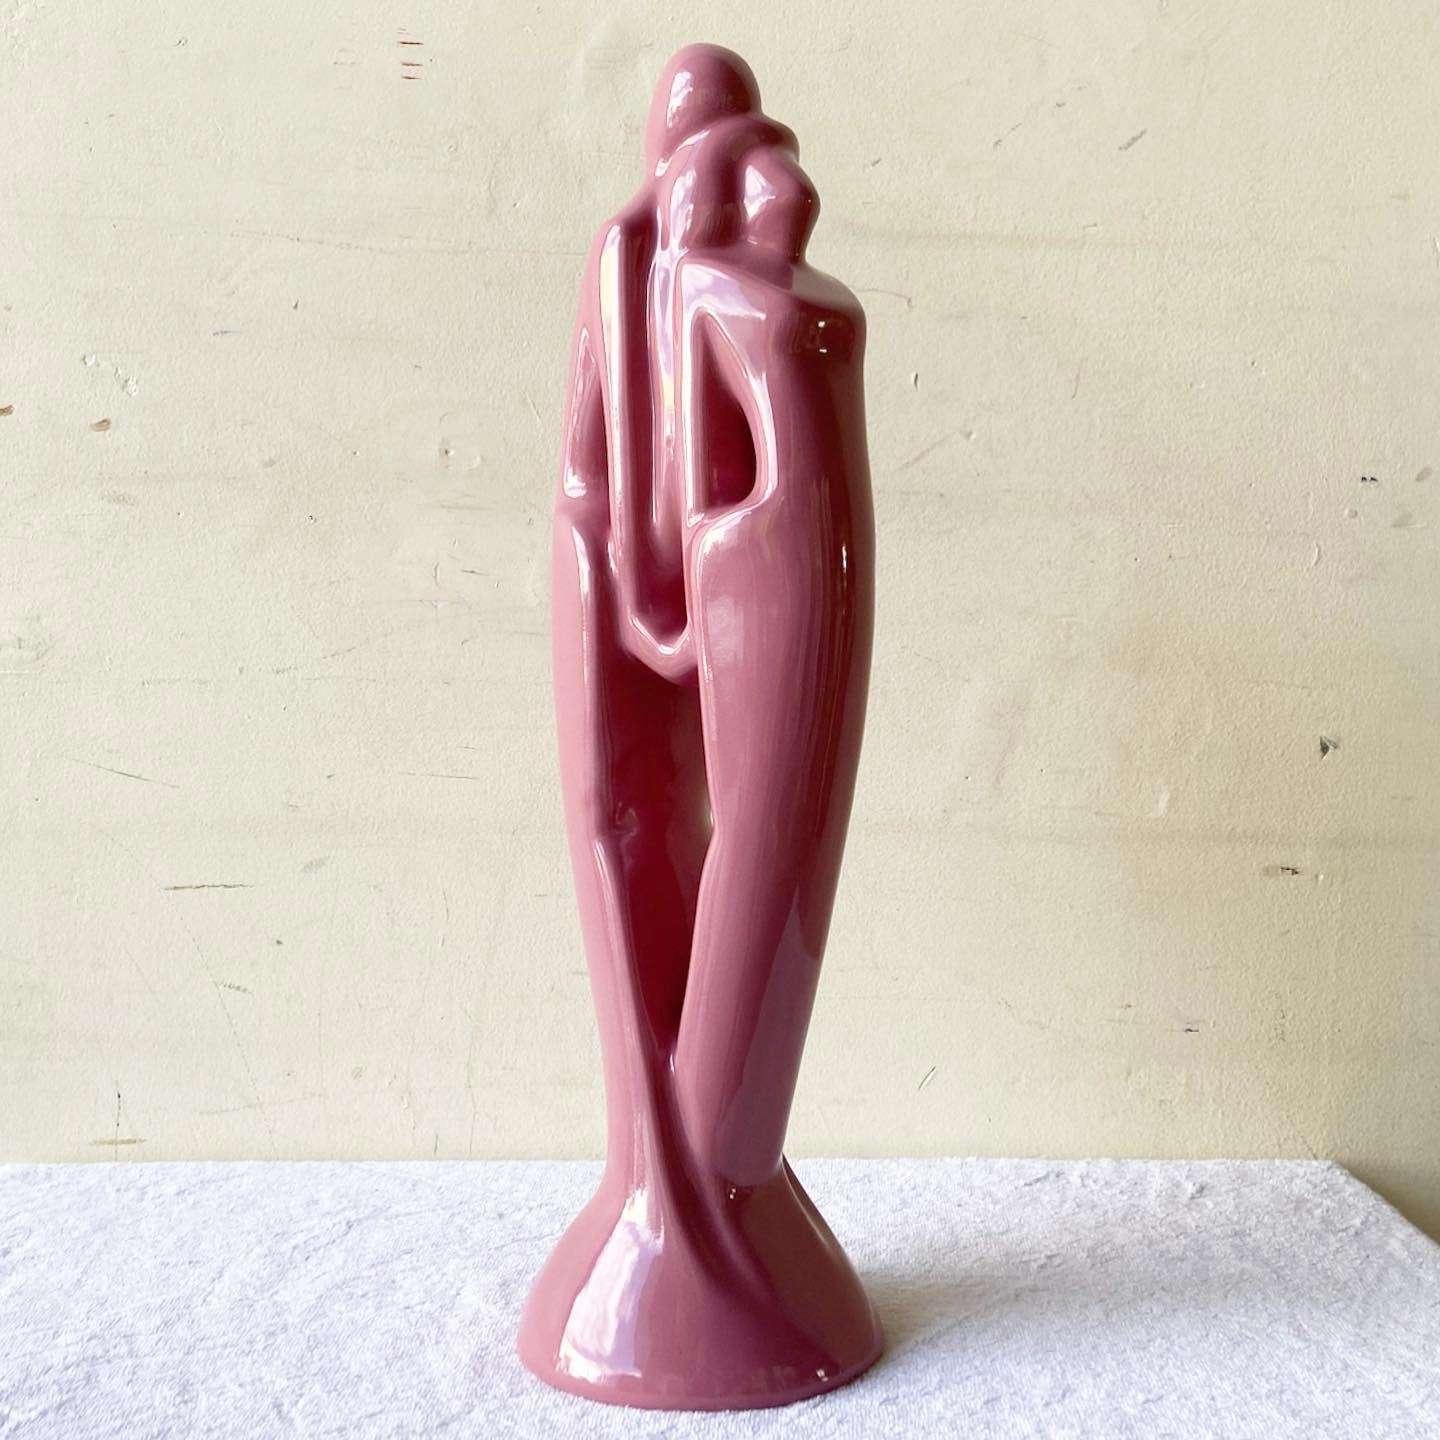 Incredible vintage postmodern pink ceramic sculpture in the style of Haeger.
